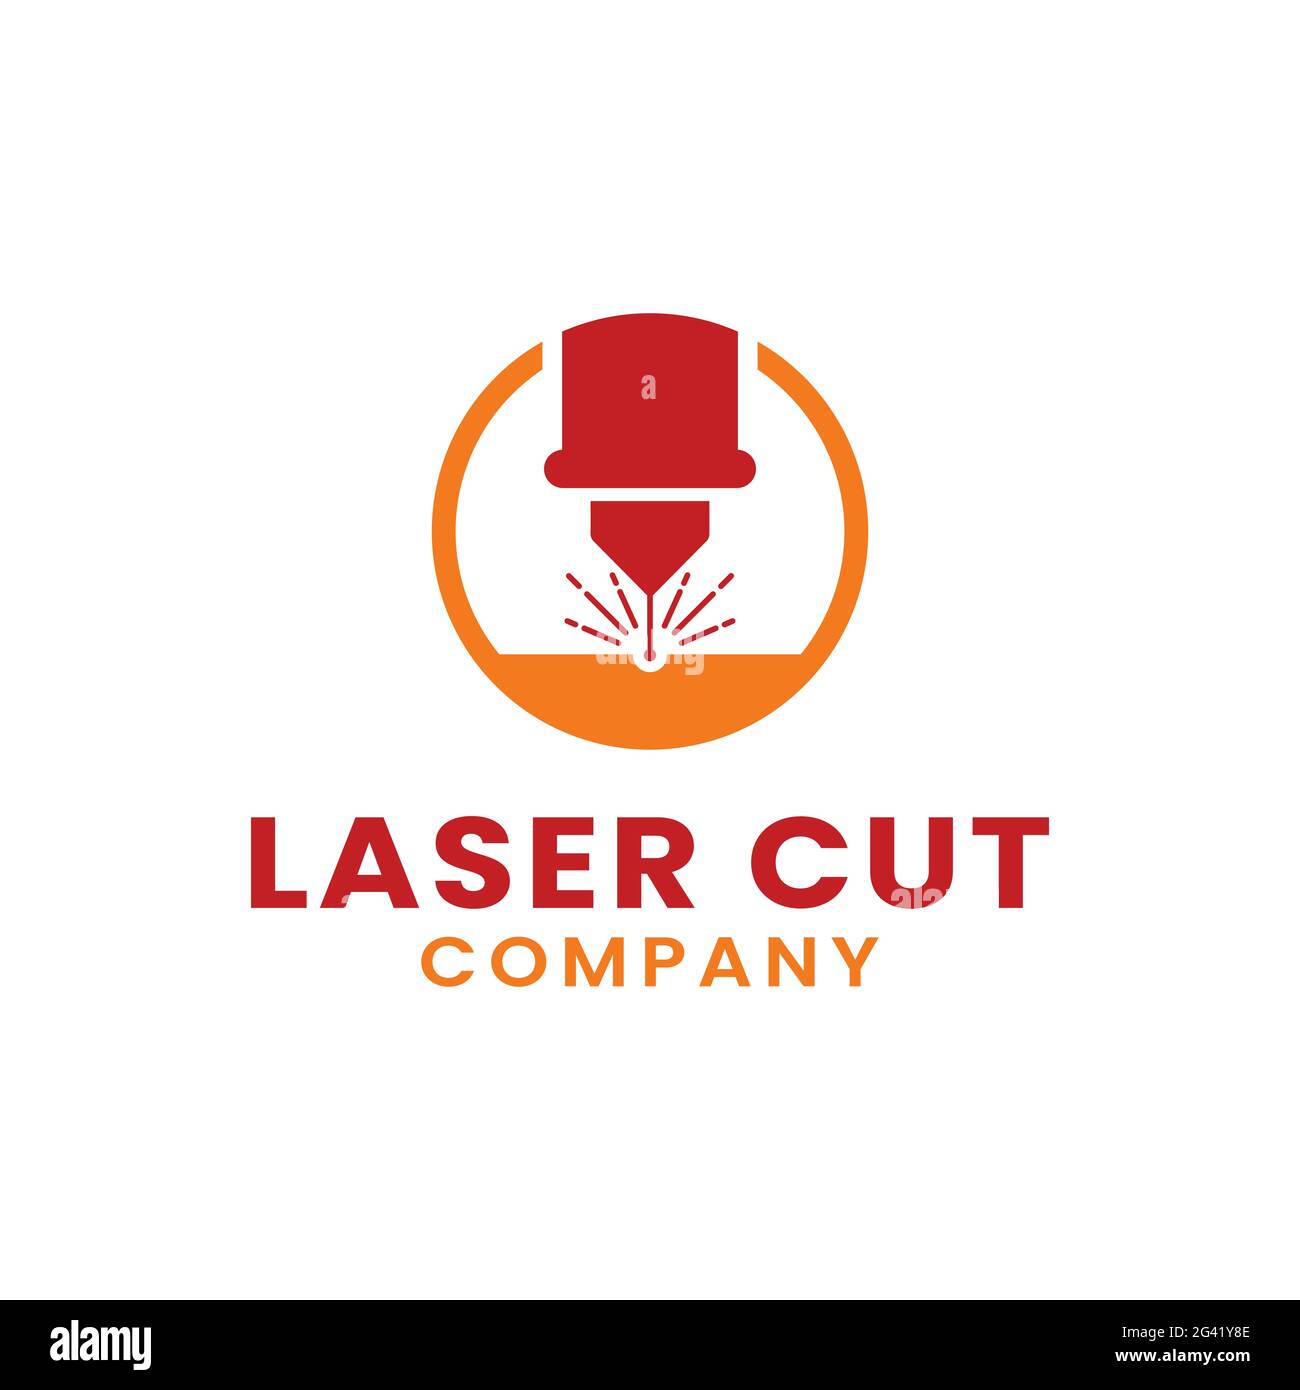 Laser Beam Plasma Machine Cutting Engraving Welding Melting Milling Manufacturing Metalwork Workshop Industry Company Simple Flat Logo Design Stock Vector